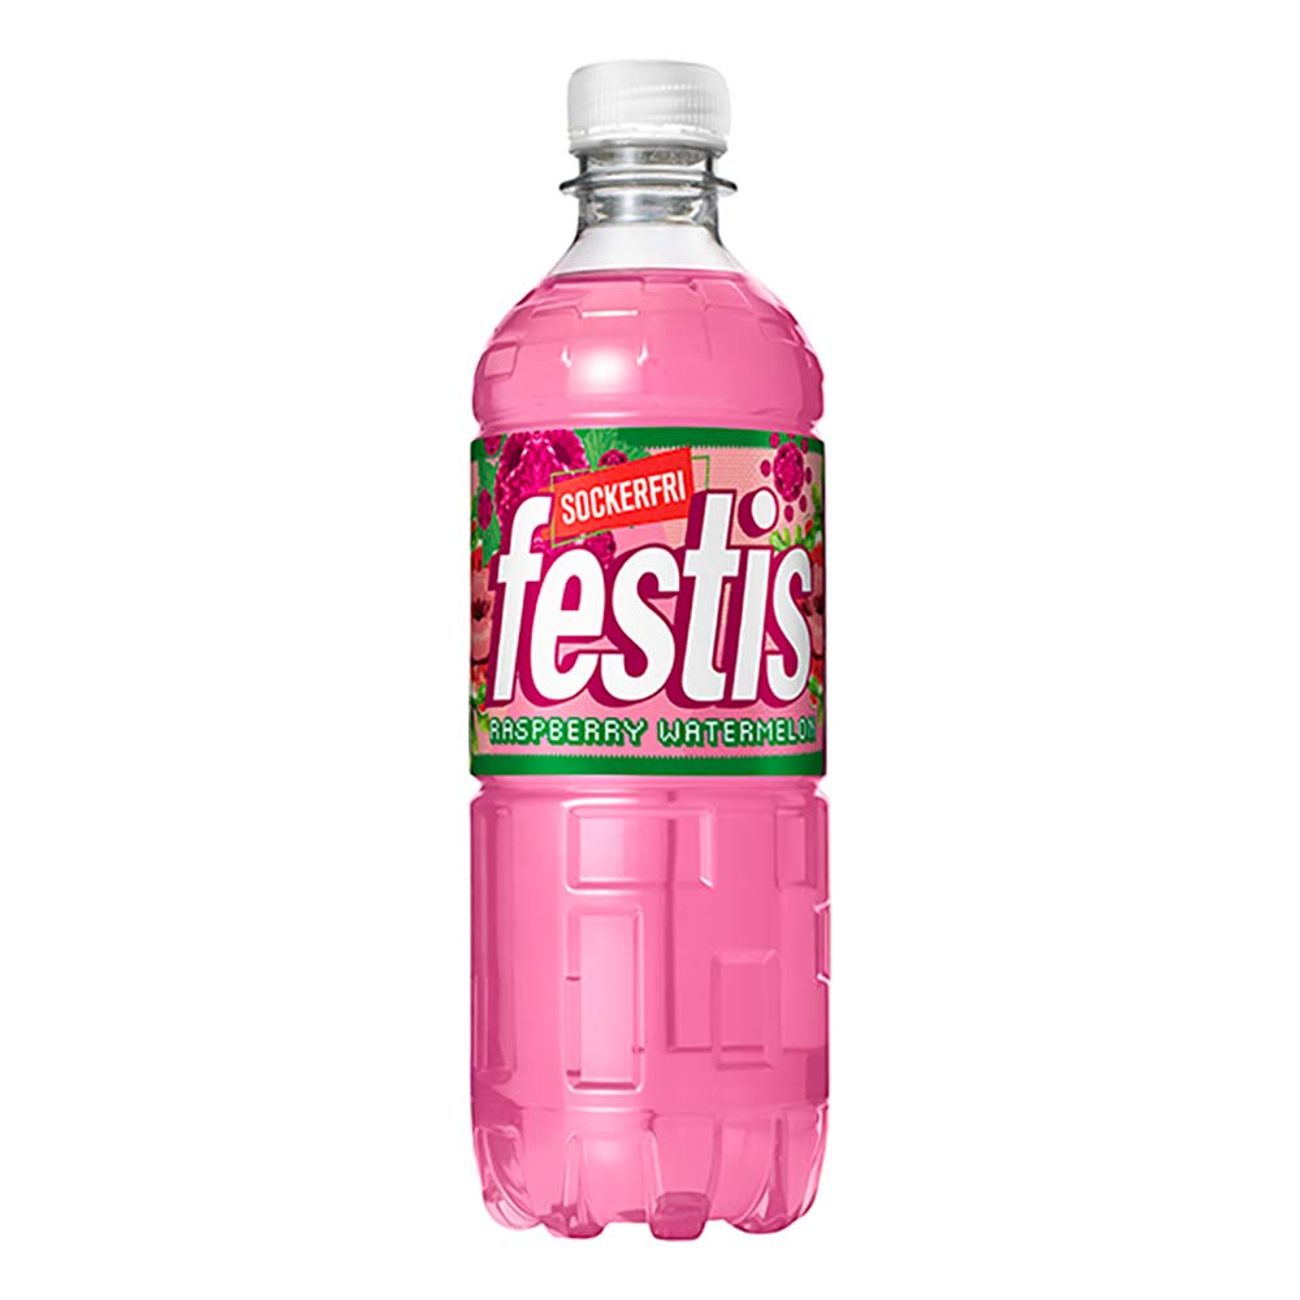 festis-raspberry-watermelon-sockerfri-94300-1